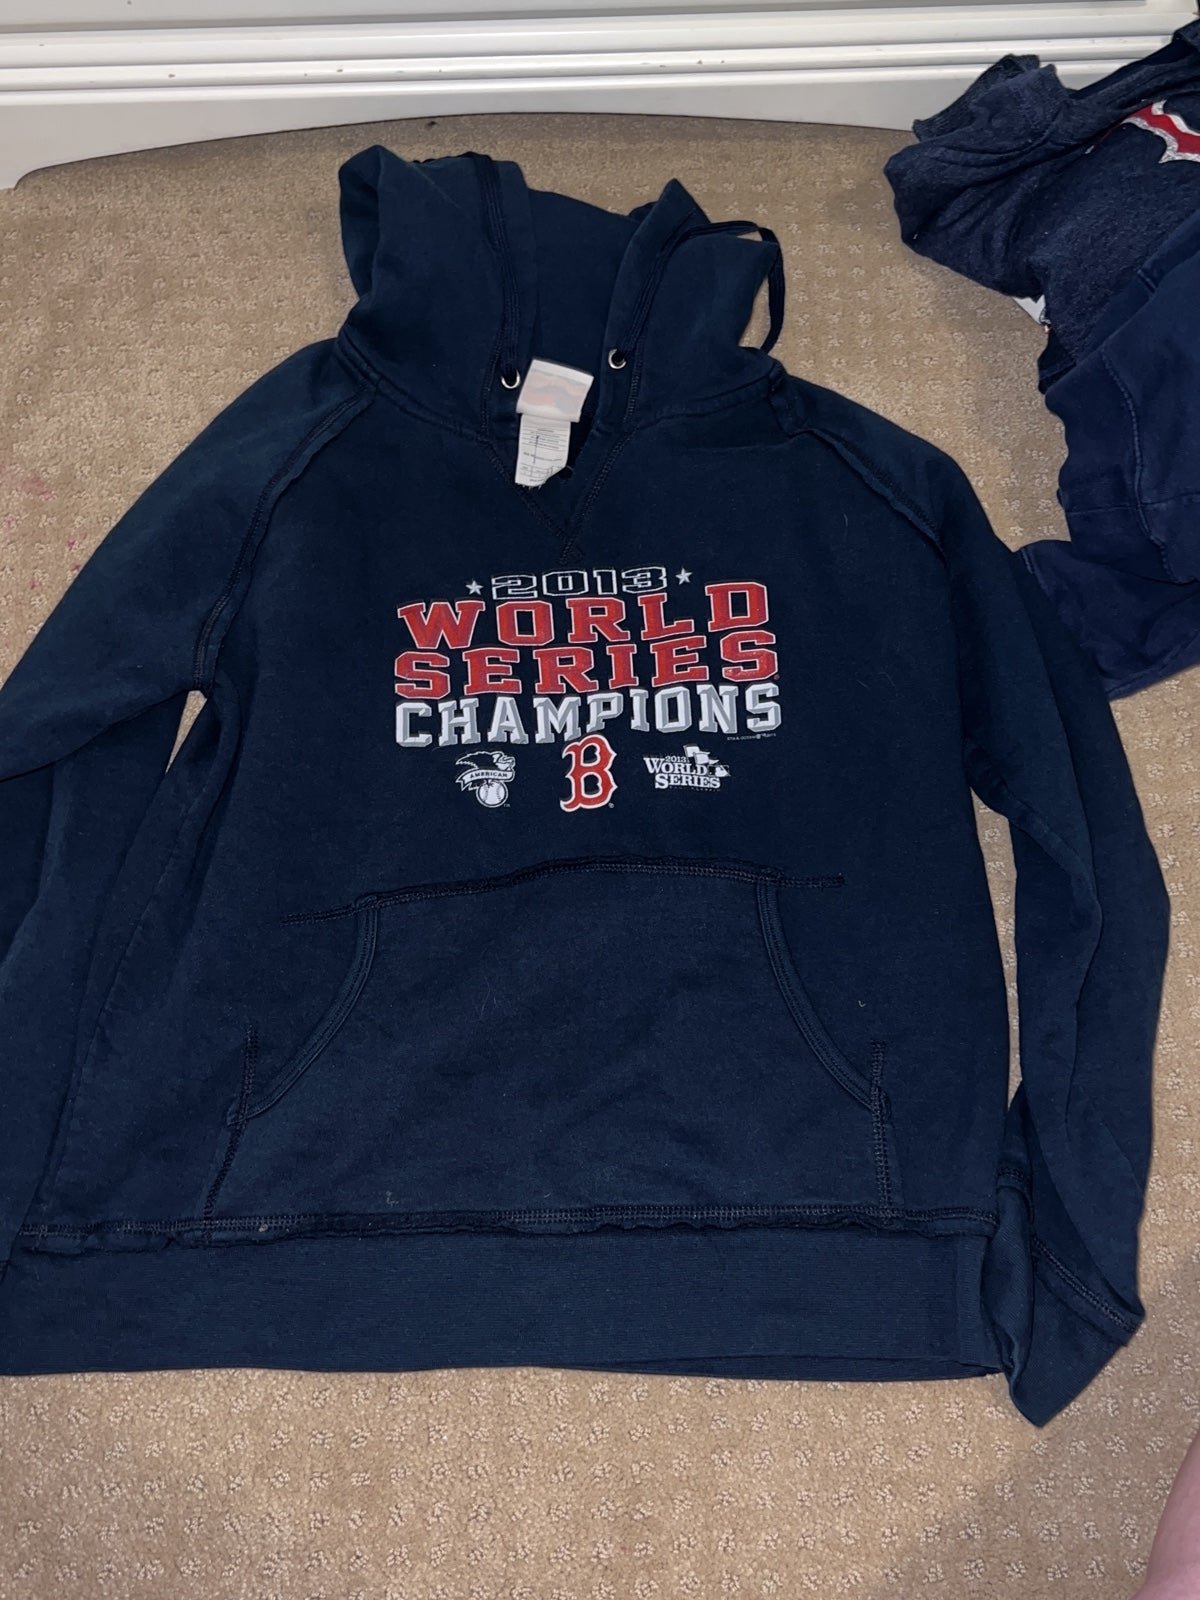 Custom Women’s Red Sox Sweatshirt size large jV2N4qqZo 